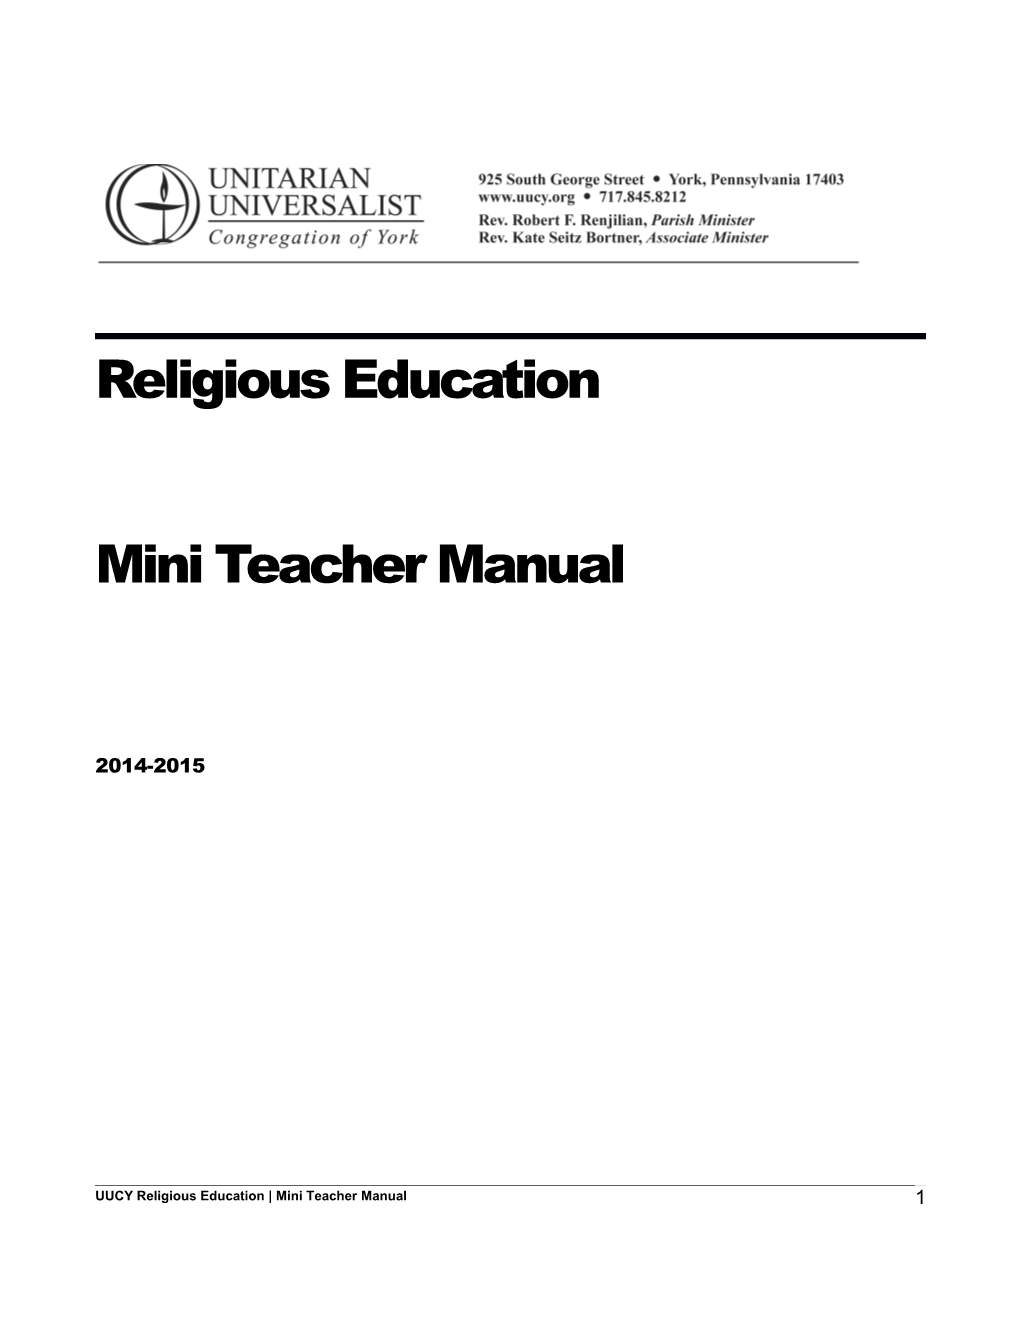 Religious Education Mini Teacher Manual